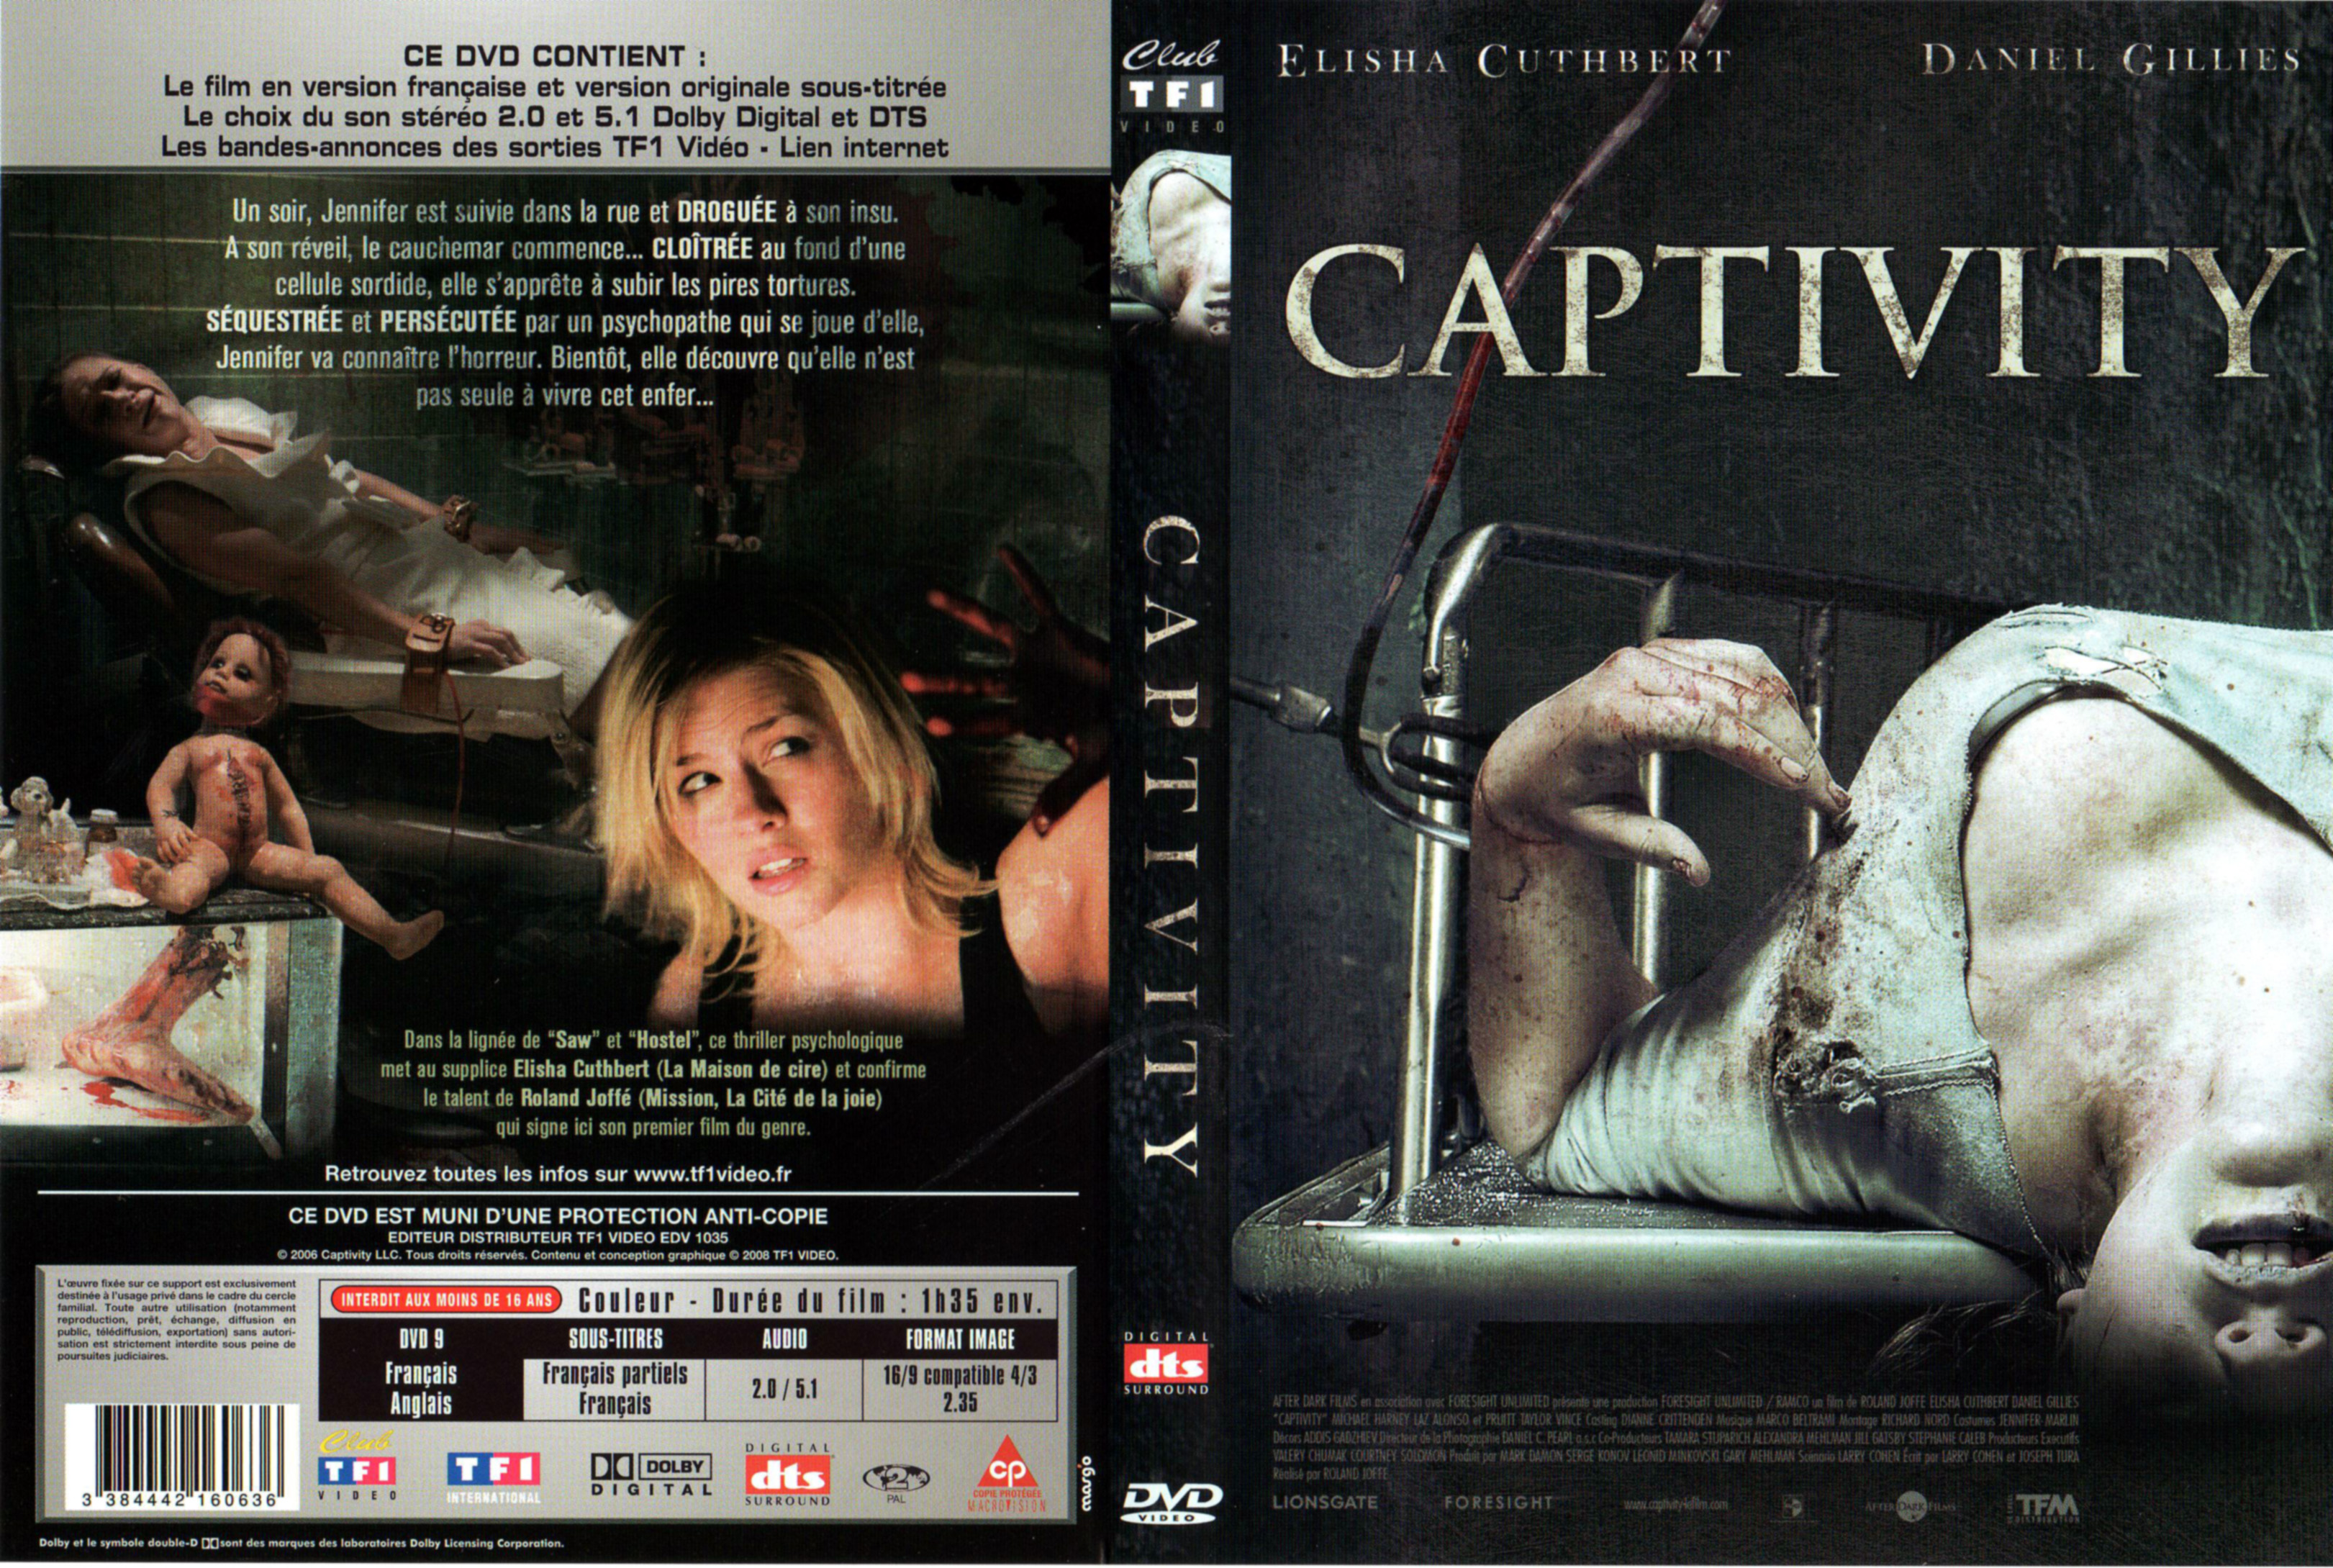 Jaquette DVD Captivity v2